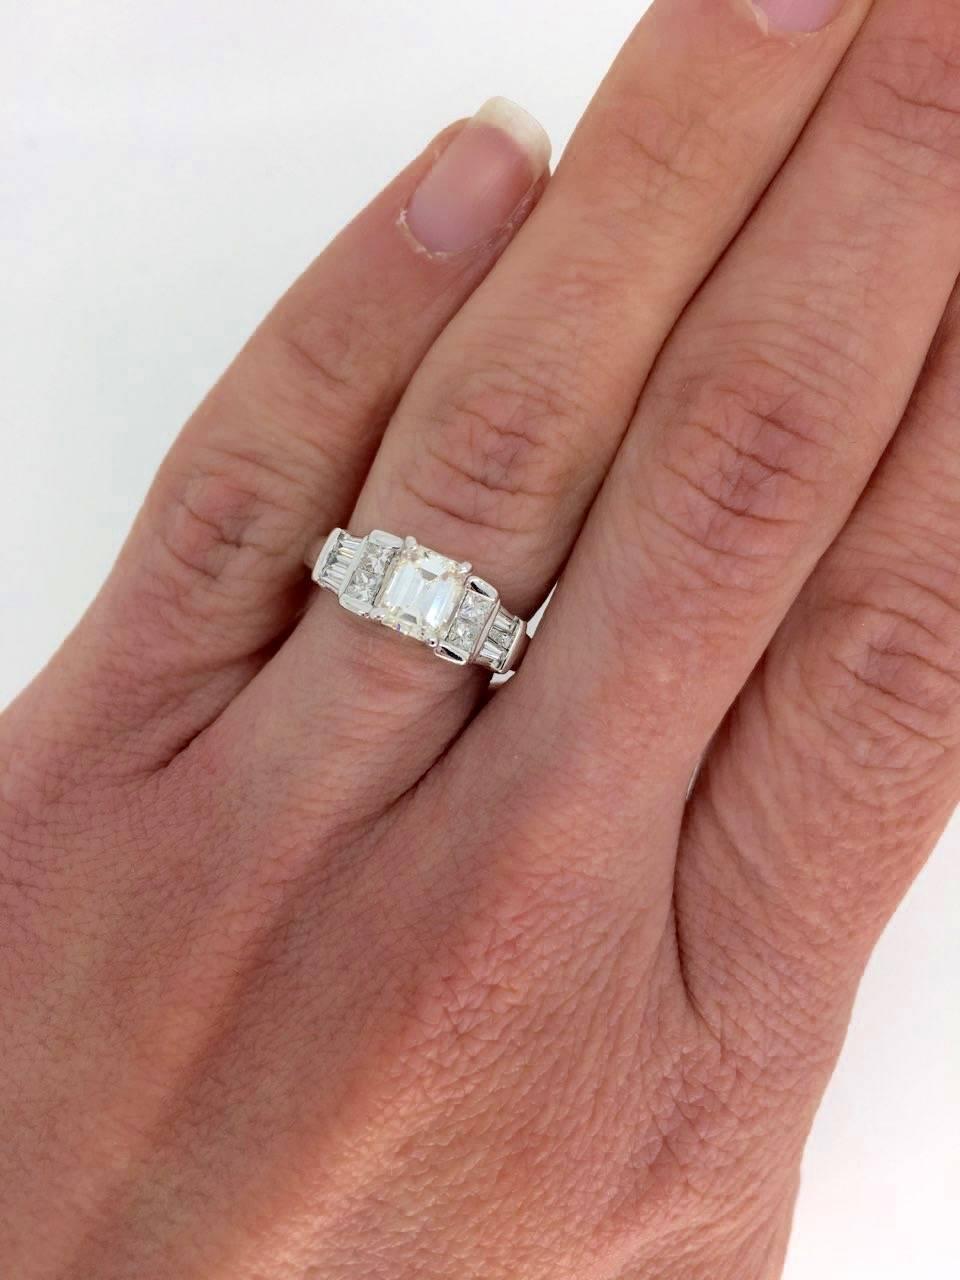 Emerald Cut diamond engagement ring set in 14K white gold.

Center Diamond Carat Weight: Approximately .65CT
Center Diamond Cut: Emerald
Center Diamond Color: J
Center Diamond Clarity:  VS2
Total Diamond Carat Weight: Approximately 1.07CTW
Accent